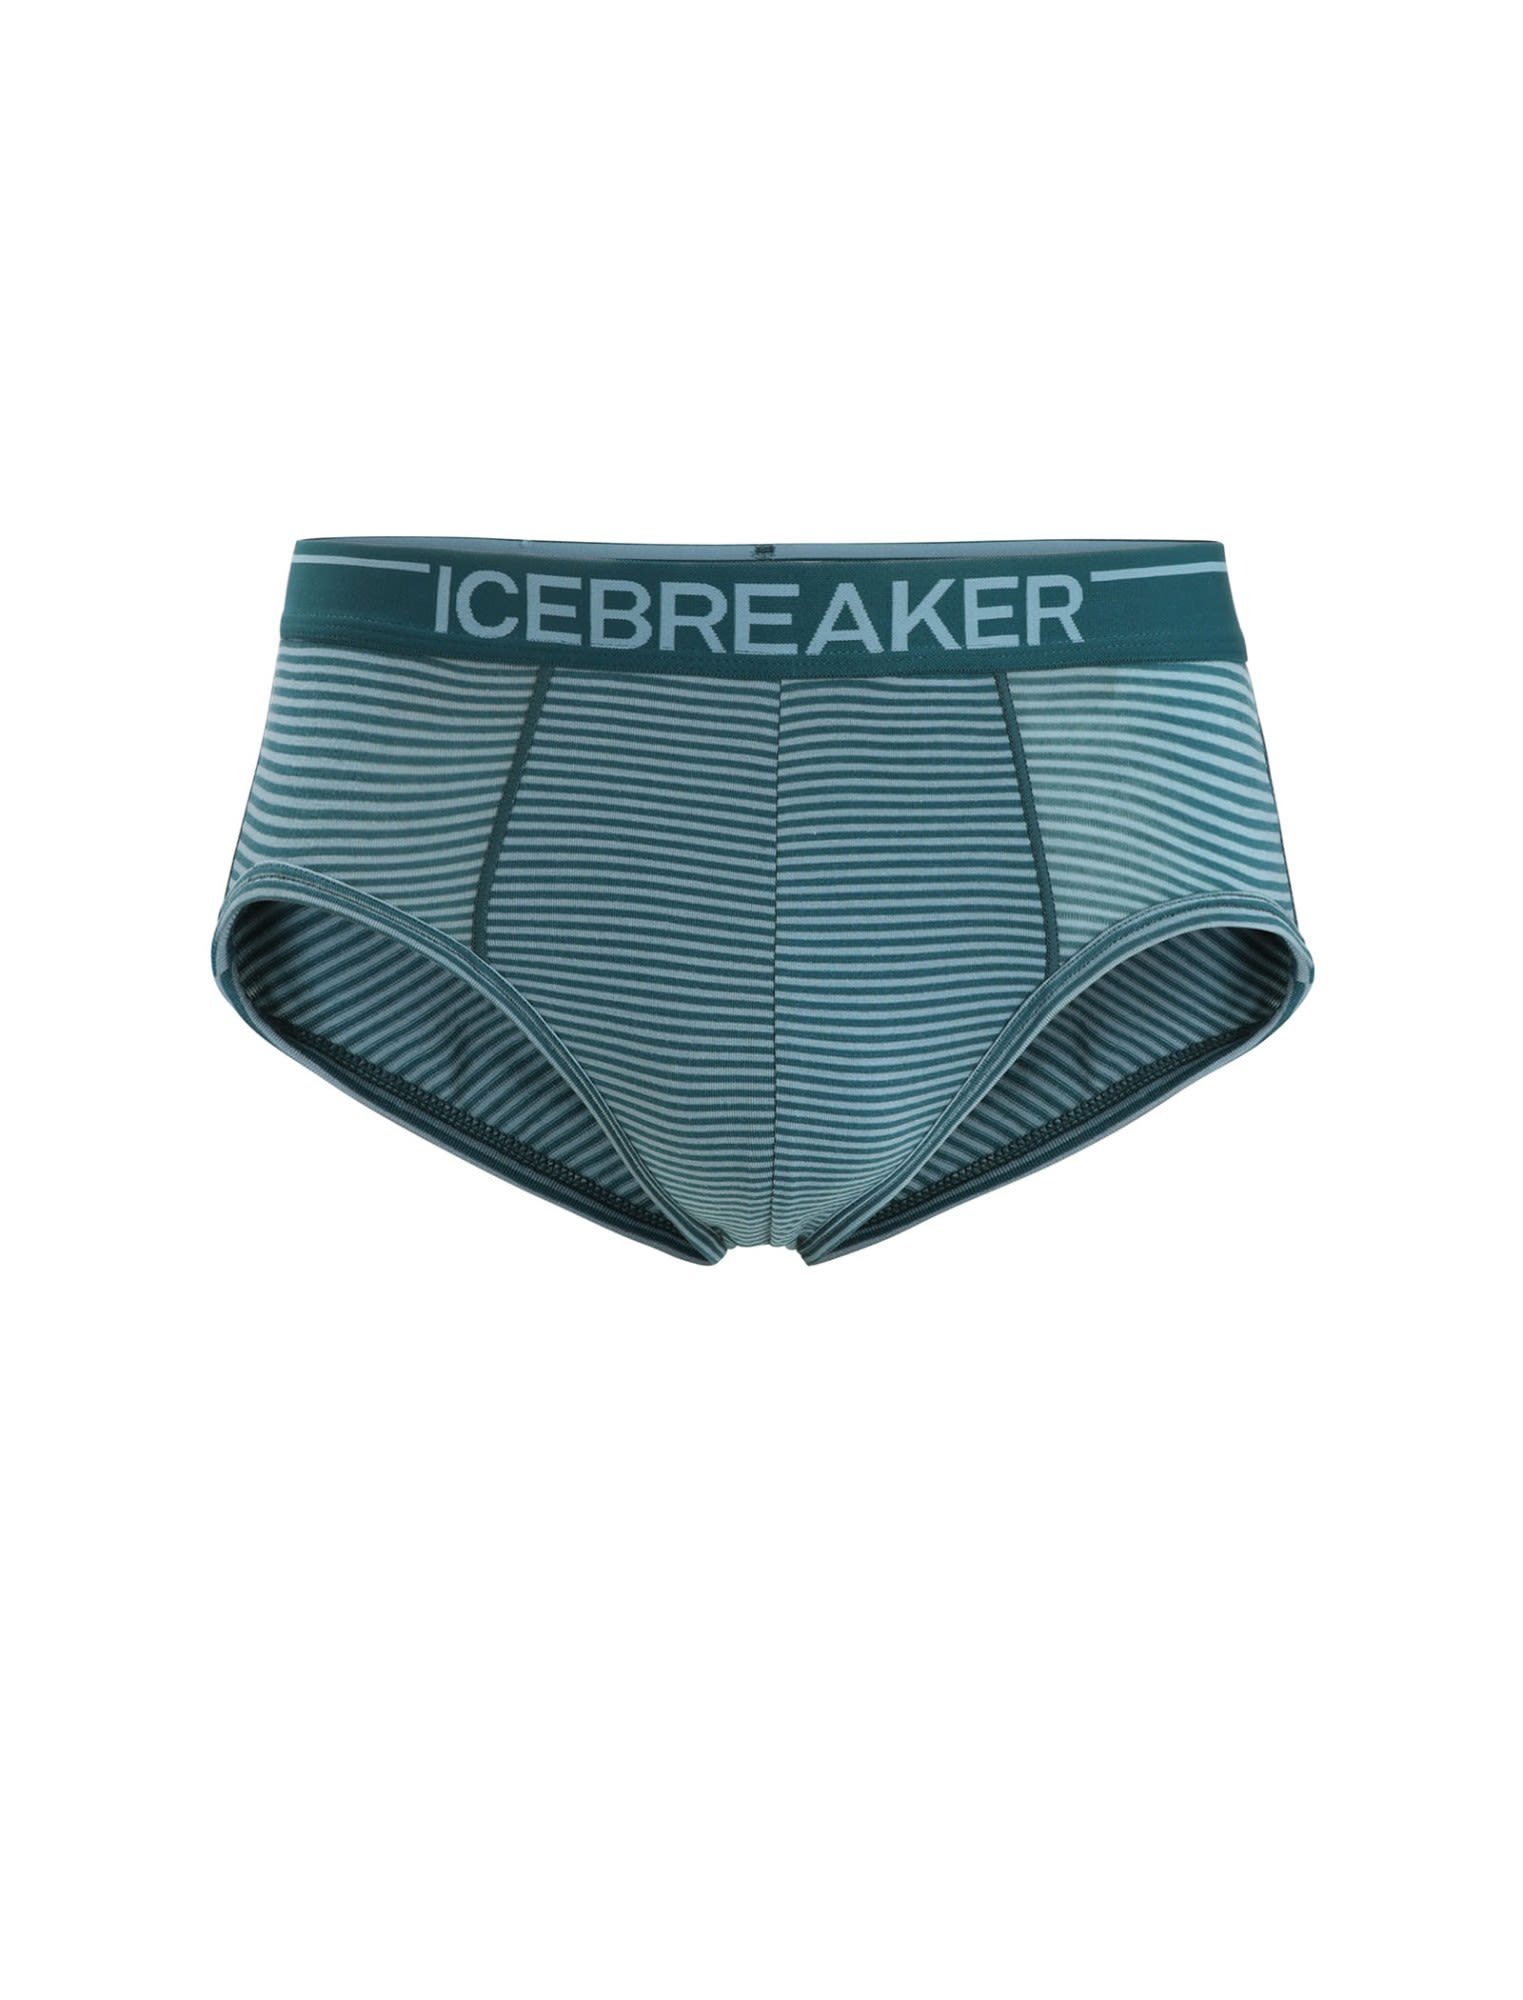 Icebreaker Glory - M Briefs Green S Icebreaker Blue Lange - Anatomica Astral Unterhose Kurze Herren